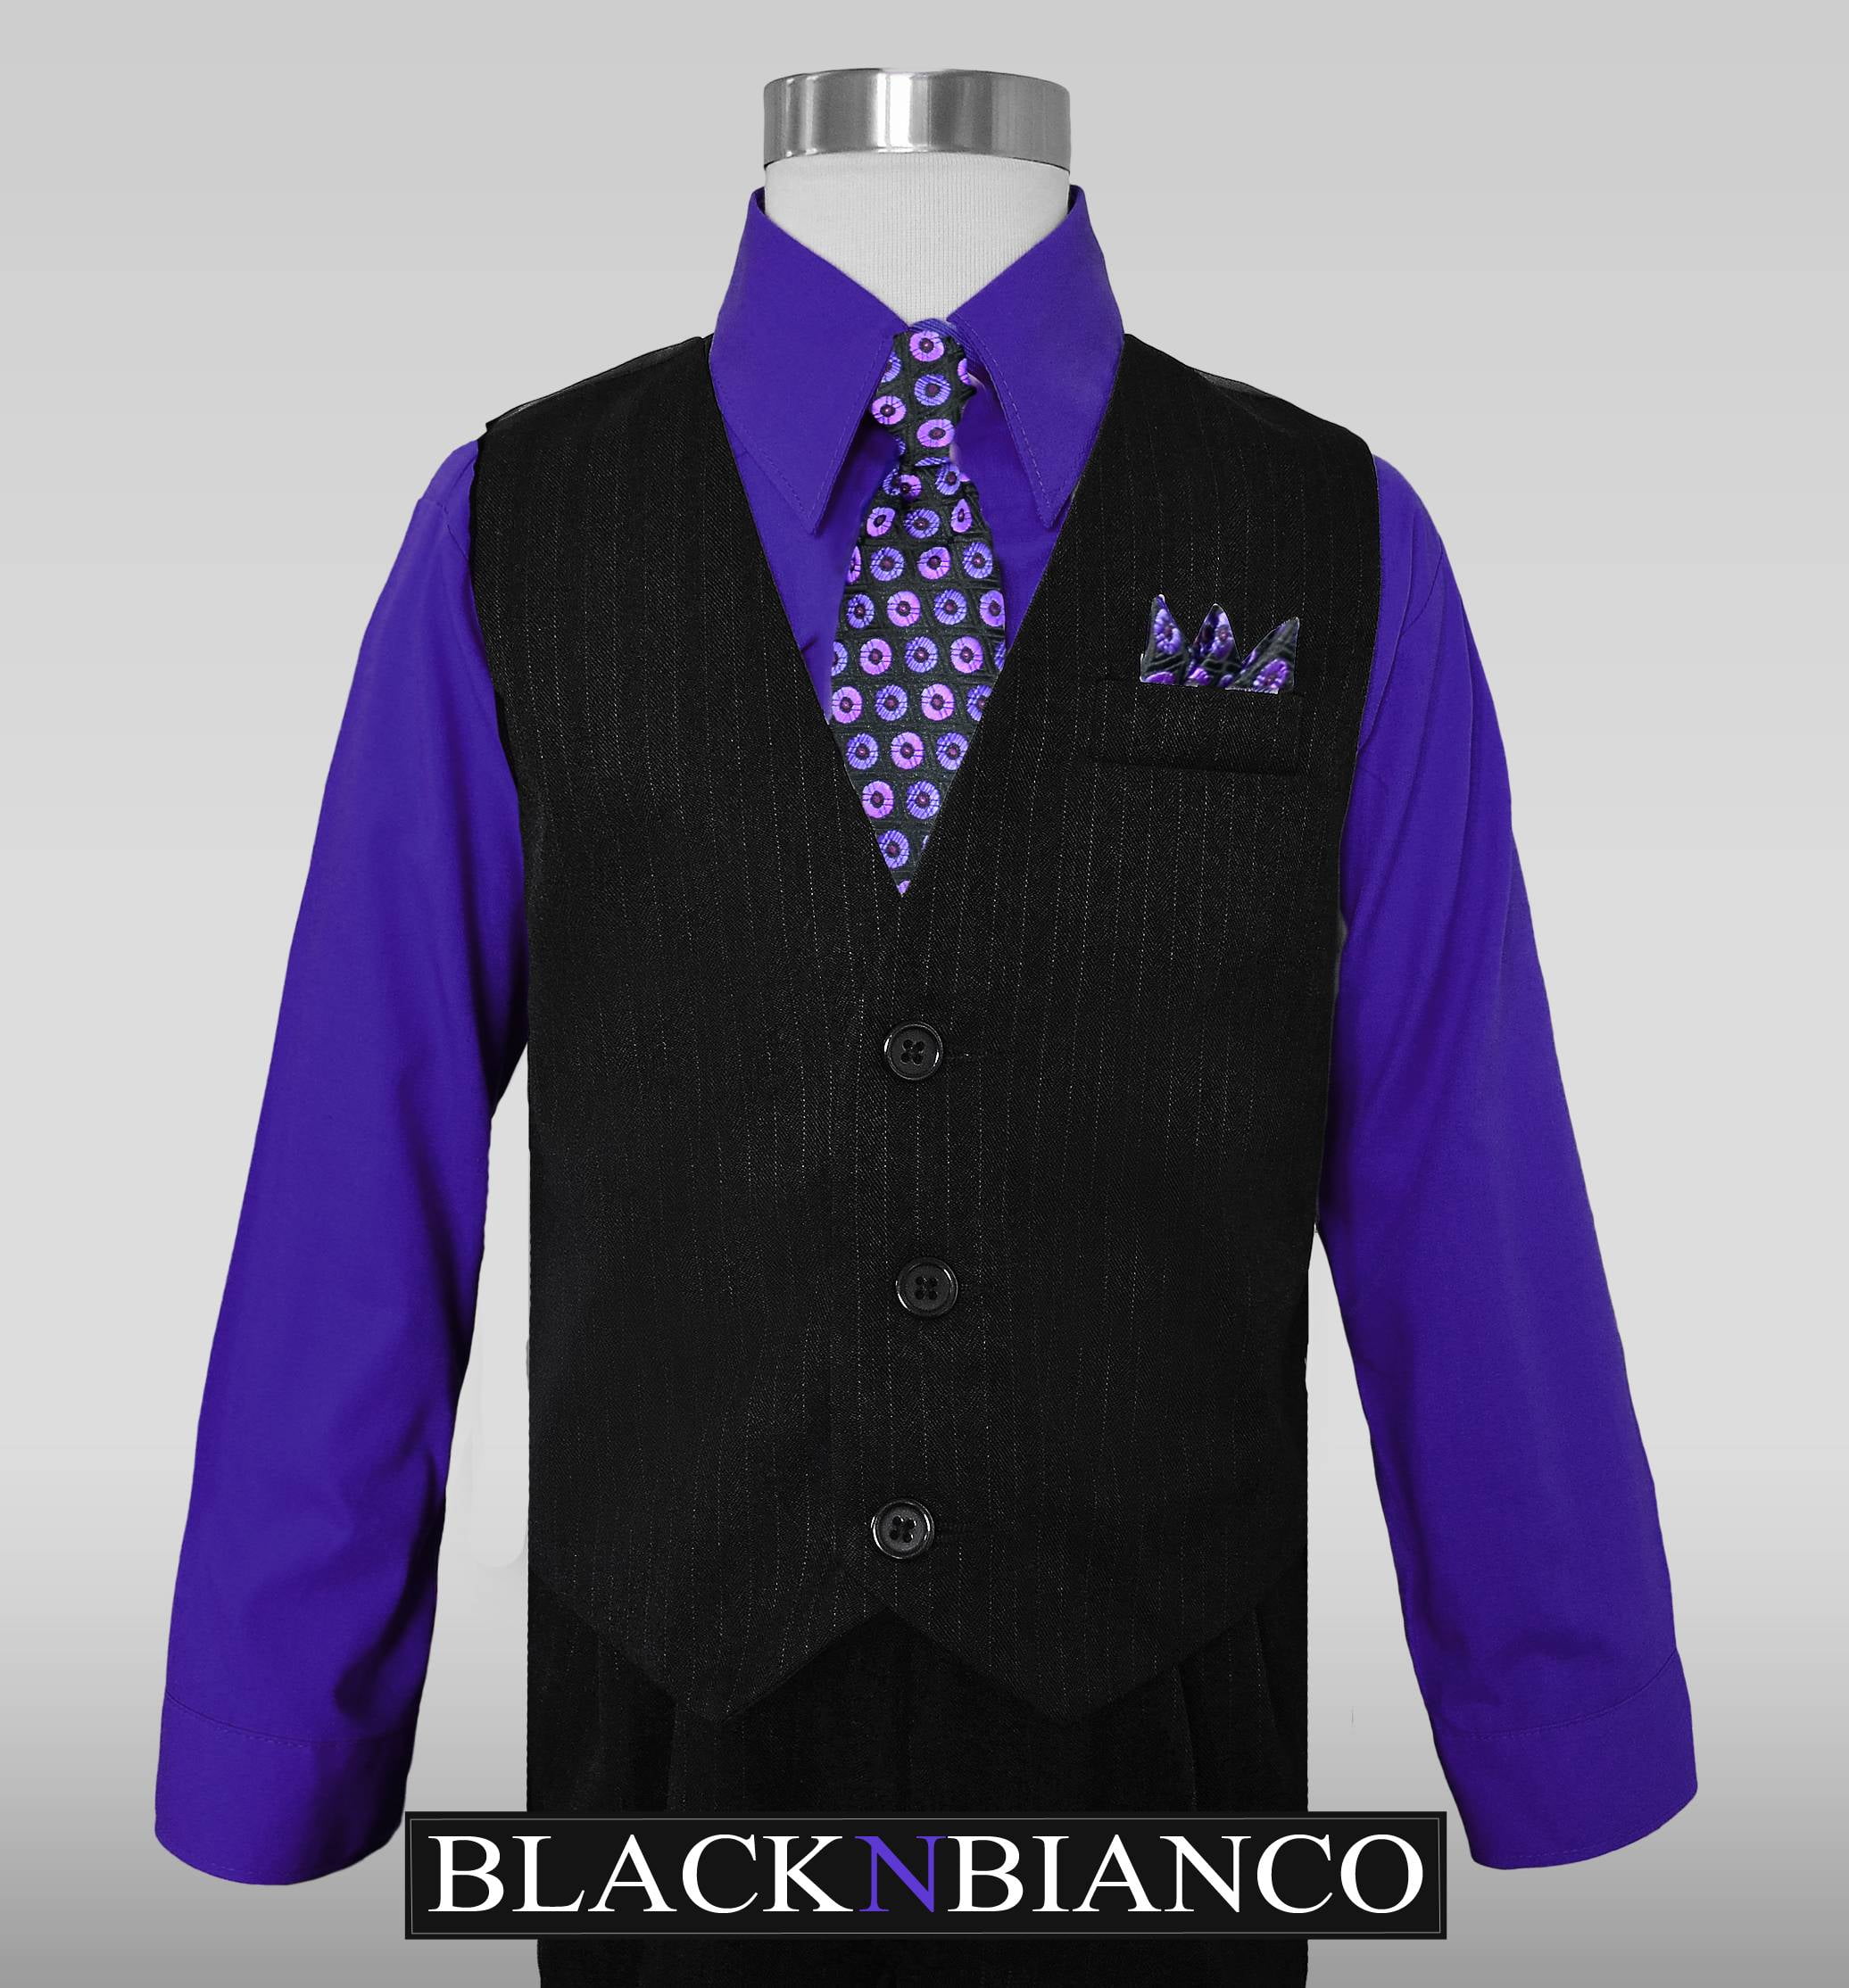 Boys Wear Black Pinstripe Vest Suits Shirt Tie Walmart.com